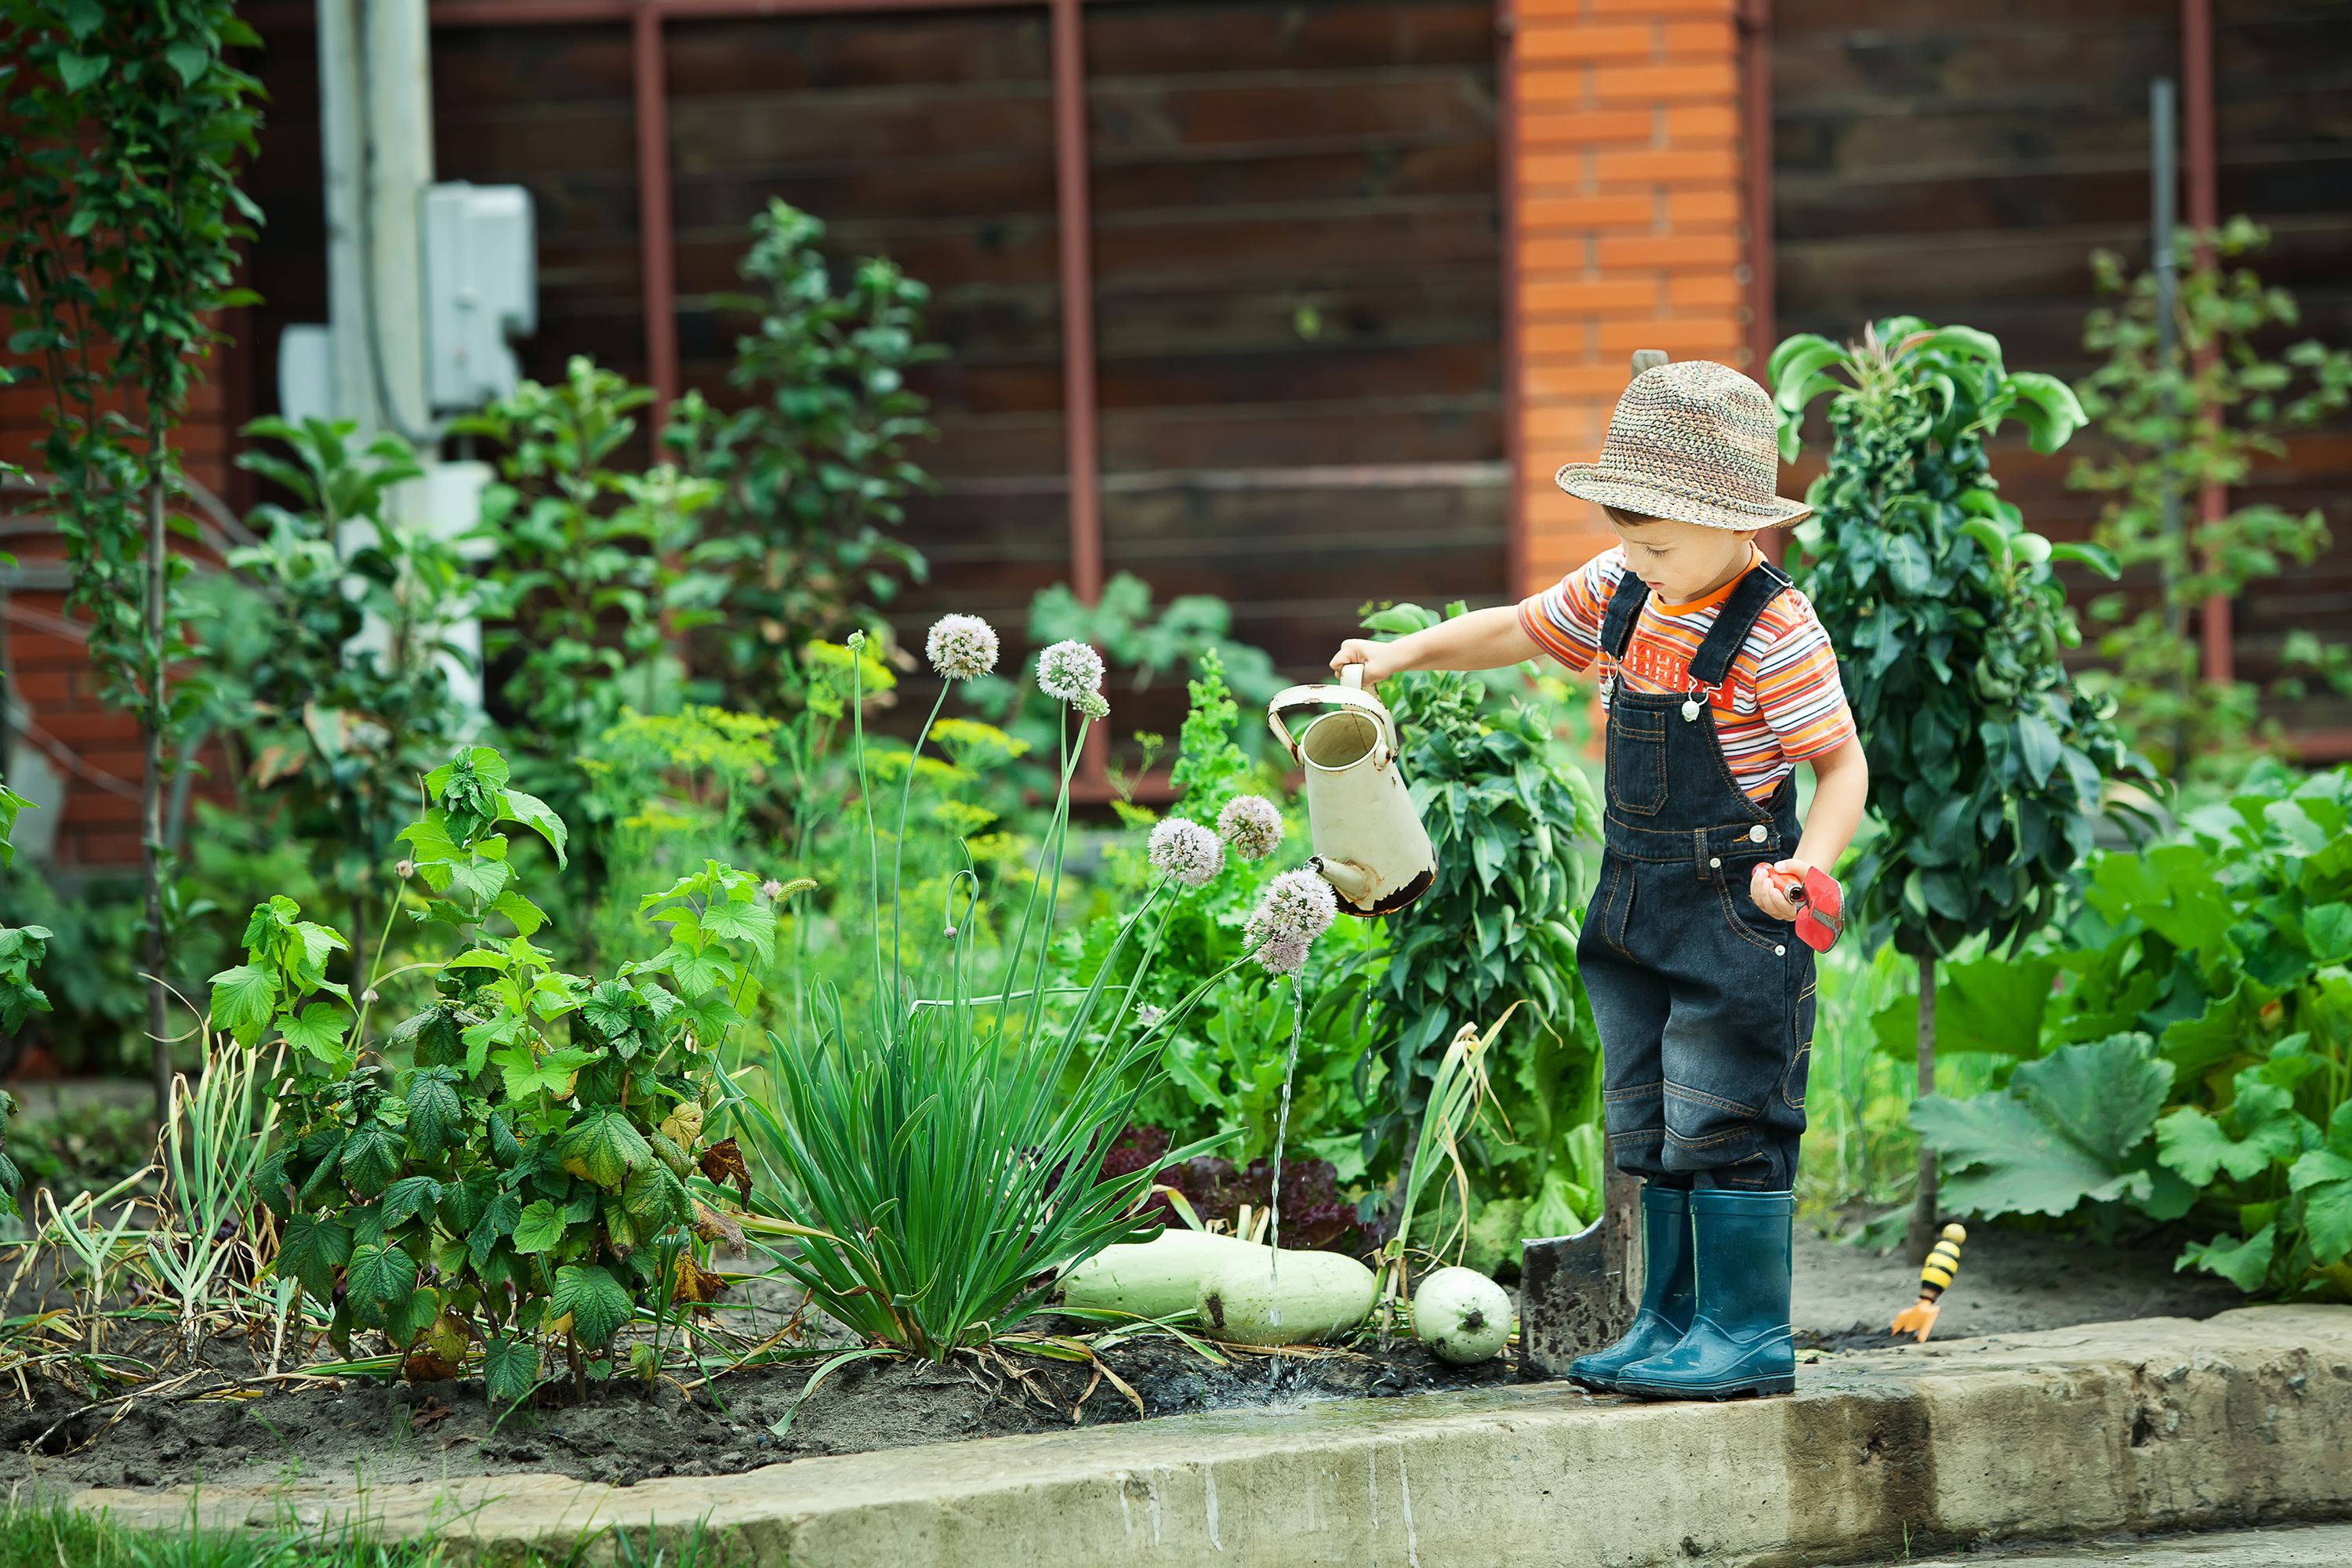 The gardener planted some. Сад и огород. Огород для детей. Детский огород на даче. Фотосессия в огороде.